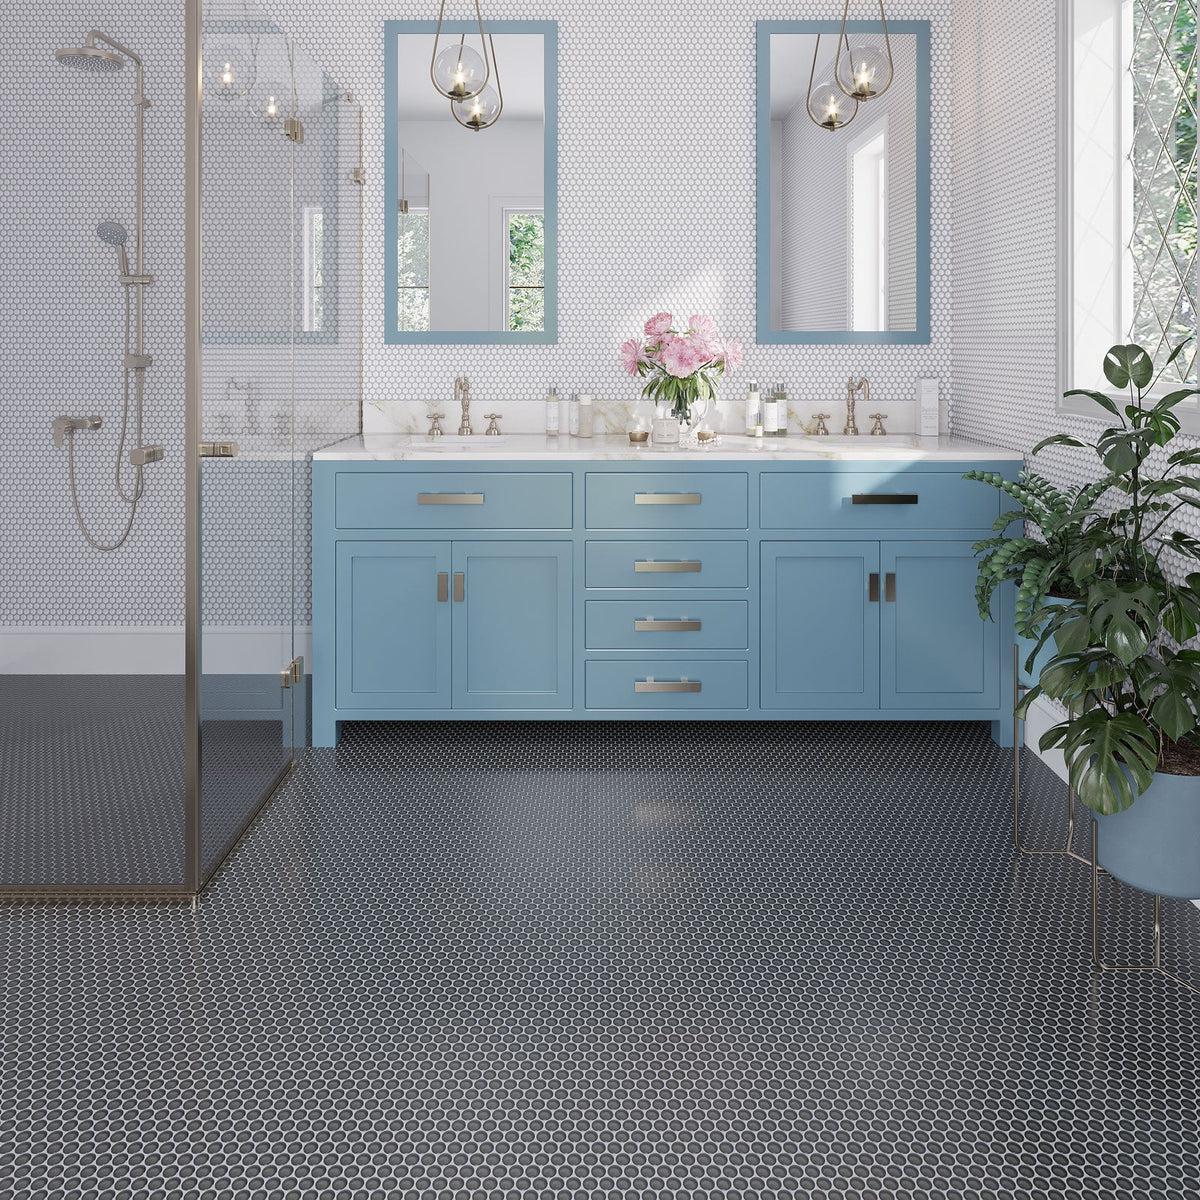 Gray penny round tile bathroom flooring